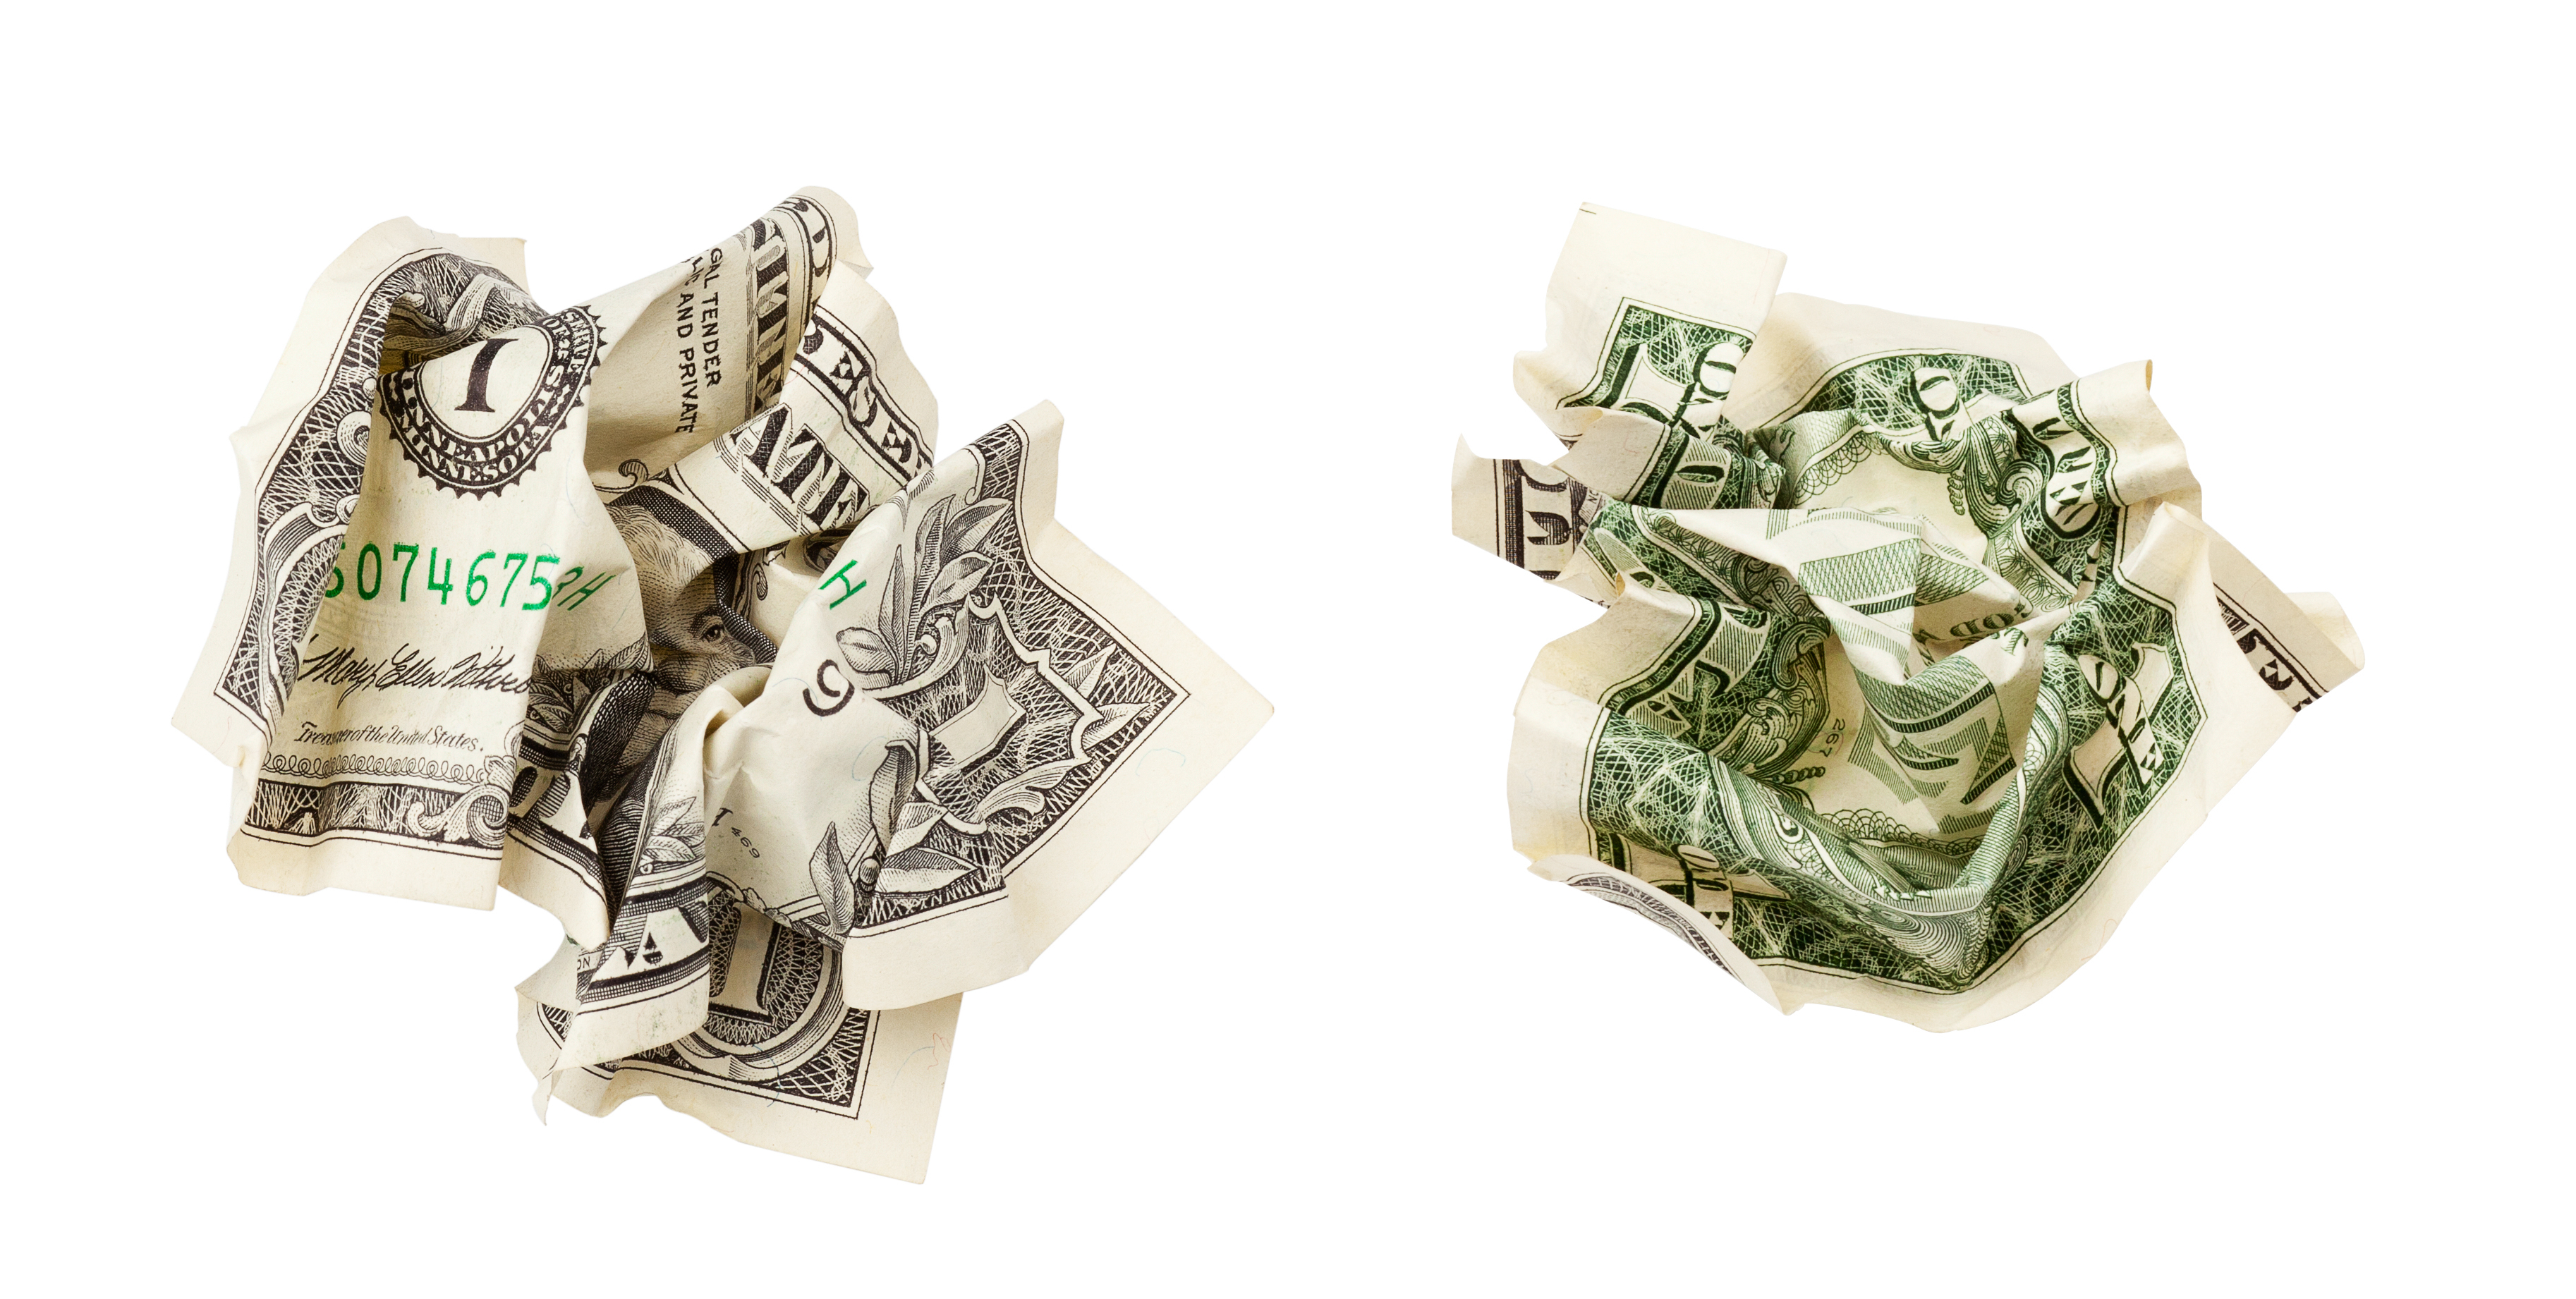 Crumpled up money | Source: Shutterstock